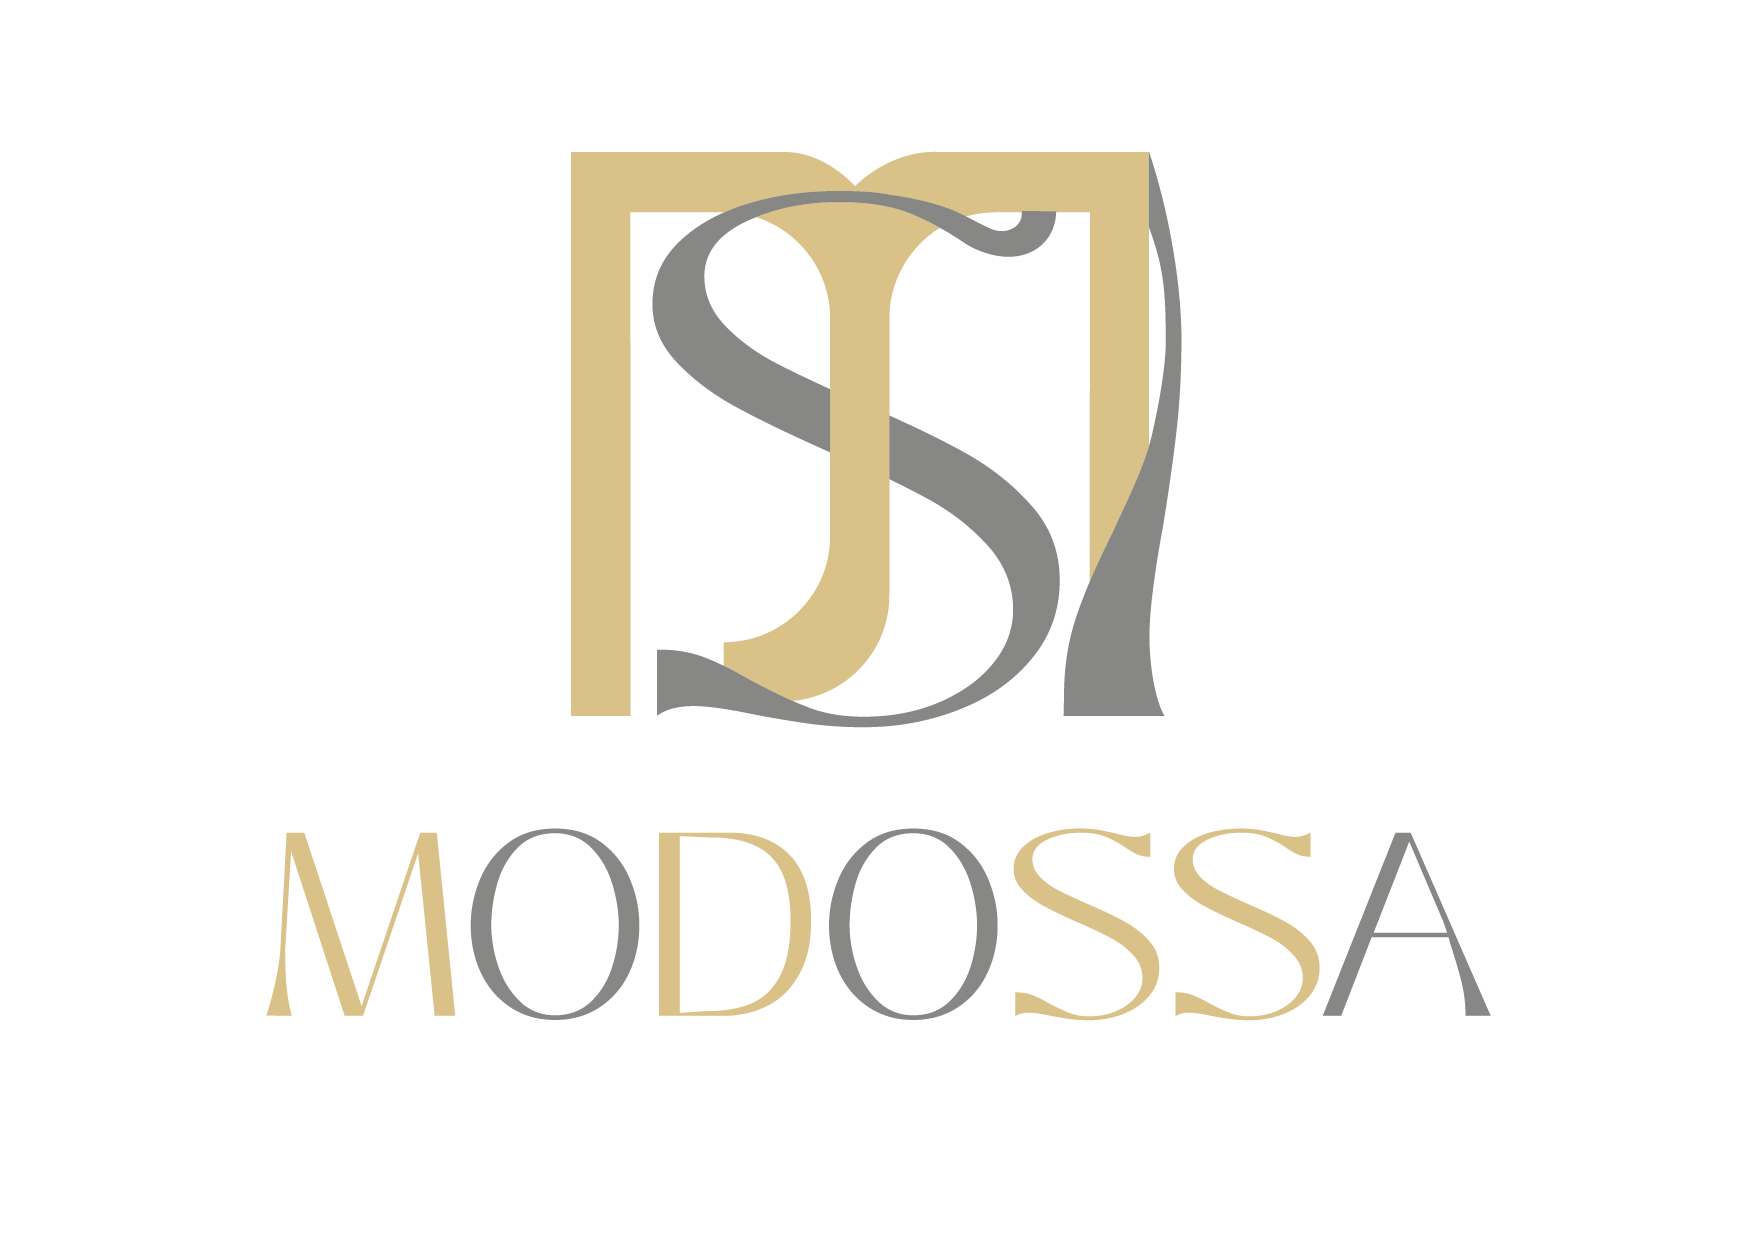 Modossa / official logo of Modossa, luxury fashion brand